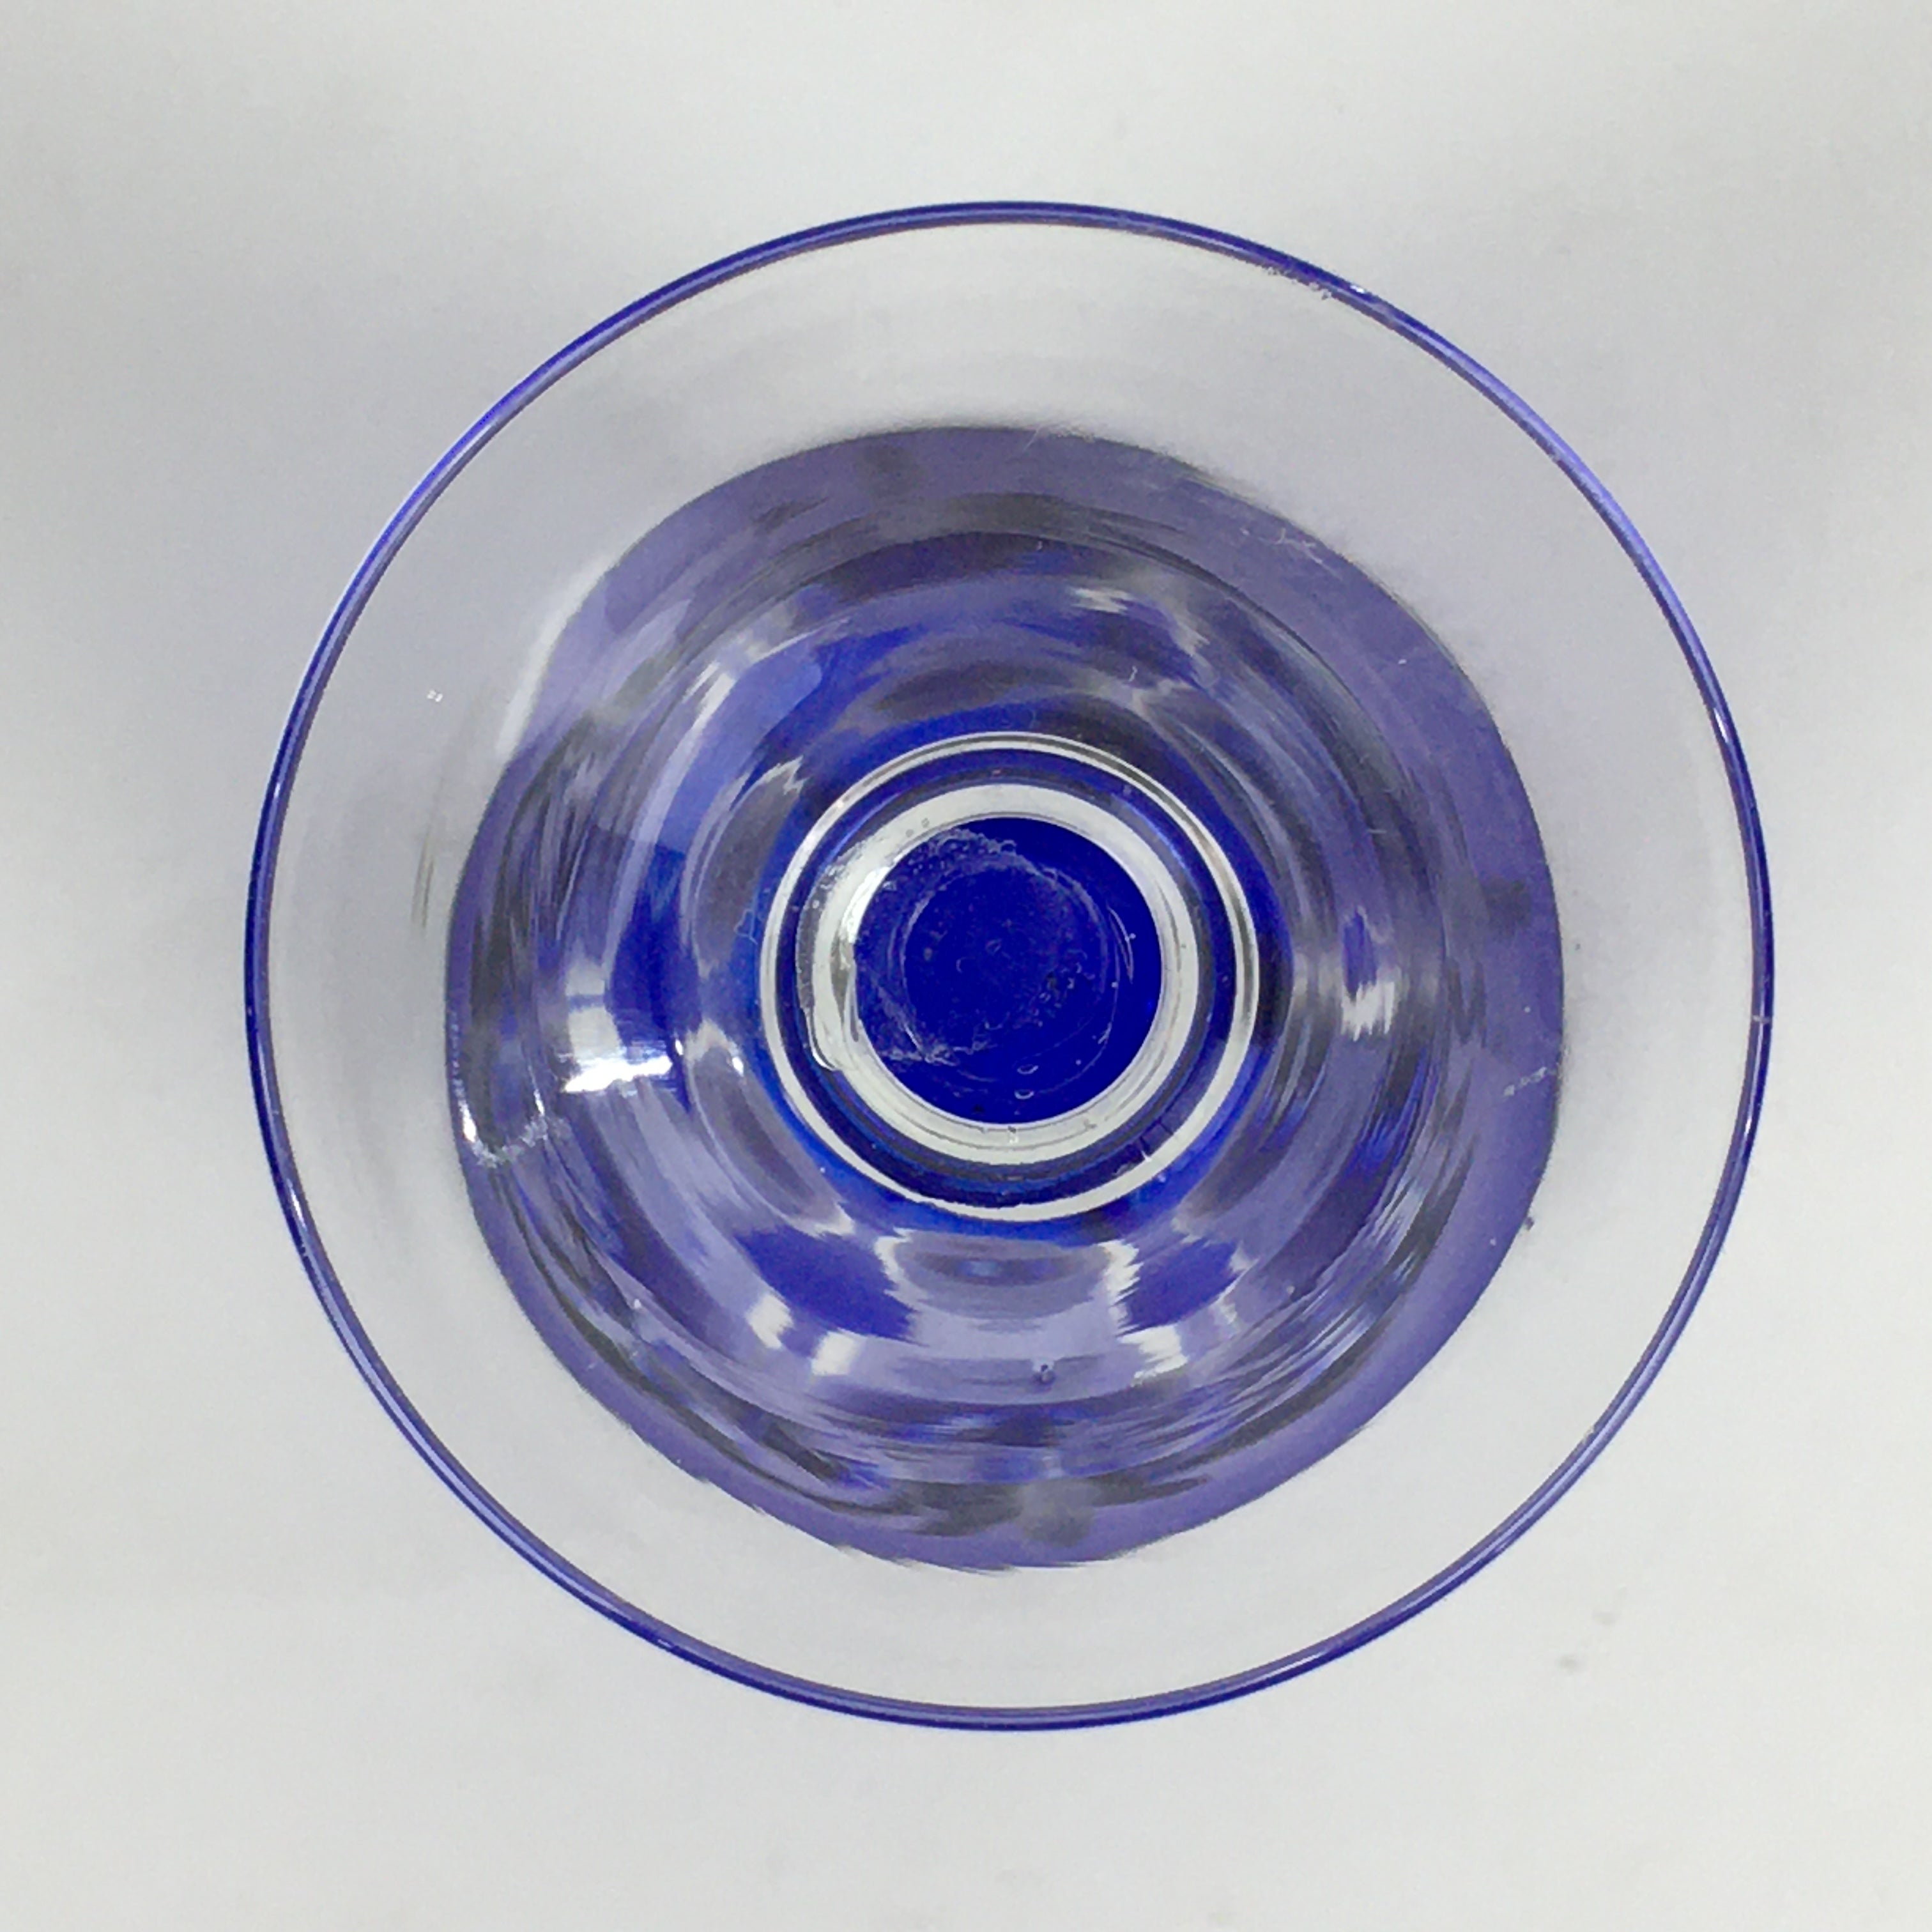 Japanese Wine Glass Edo Kiriko Vtg Blue Crystal Glass Cold Sake Cup PP934